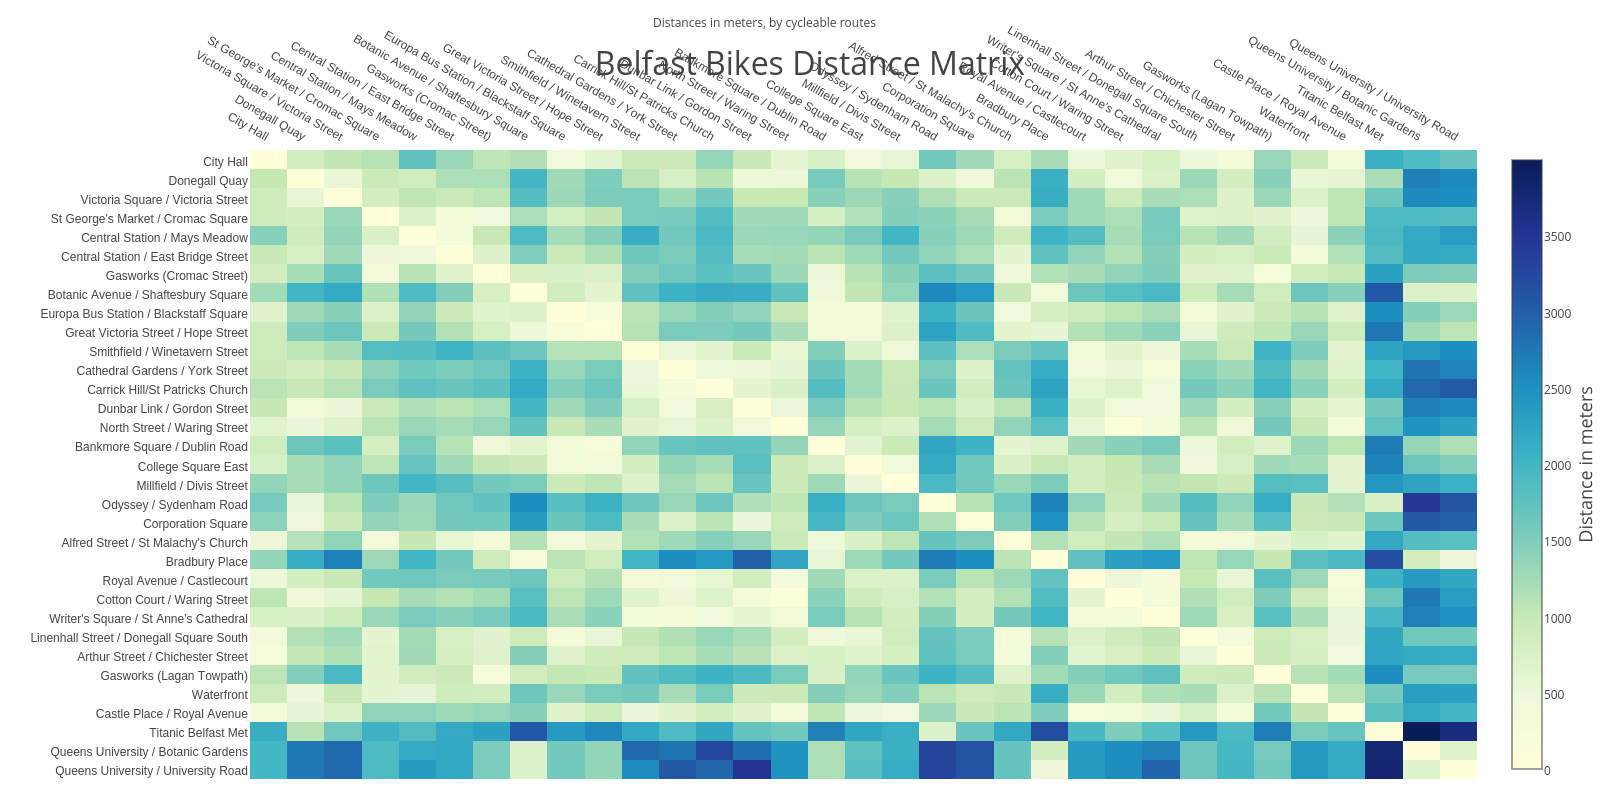 Belfast Bikes Distance Matrix | heatmap made by Bobharper | plotly